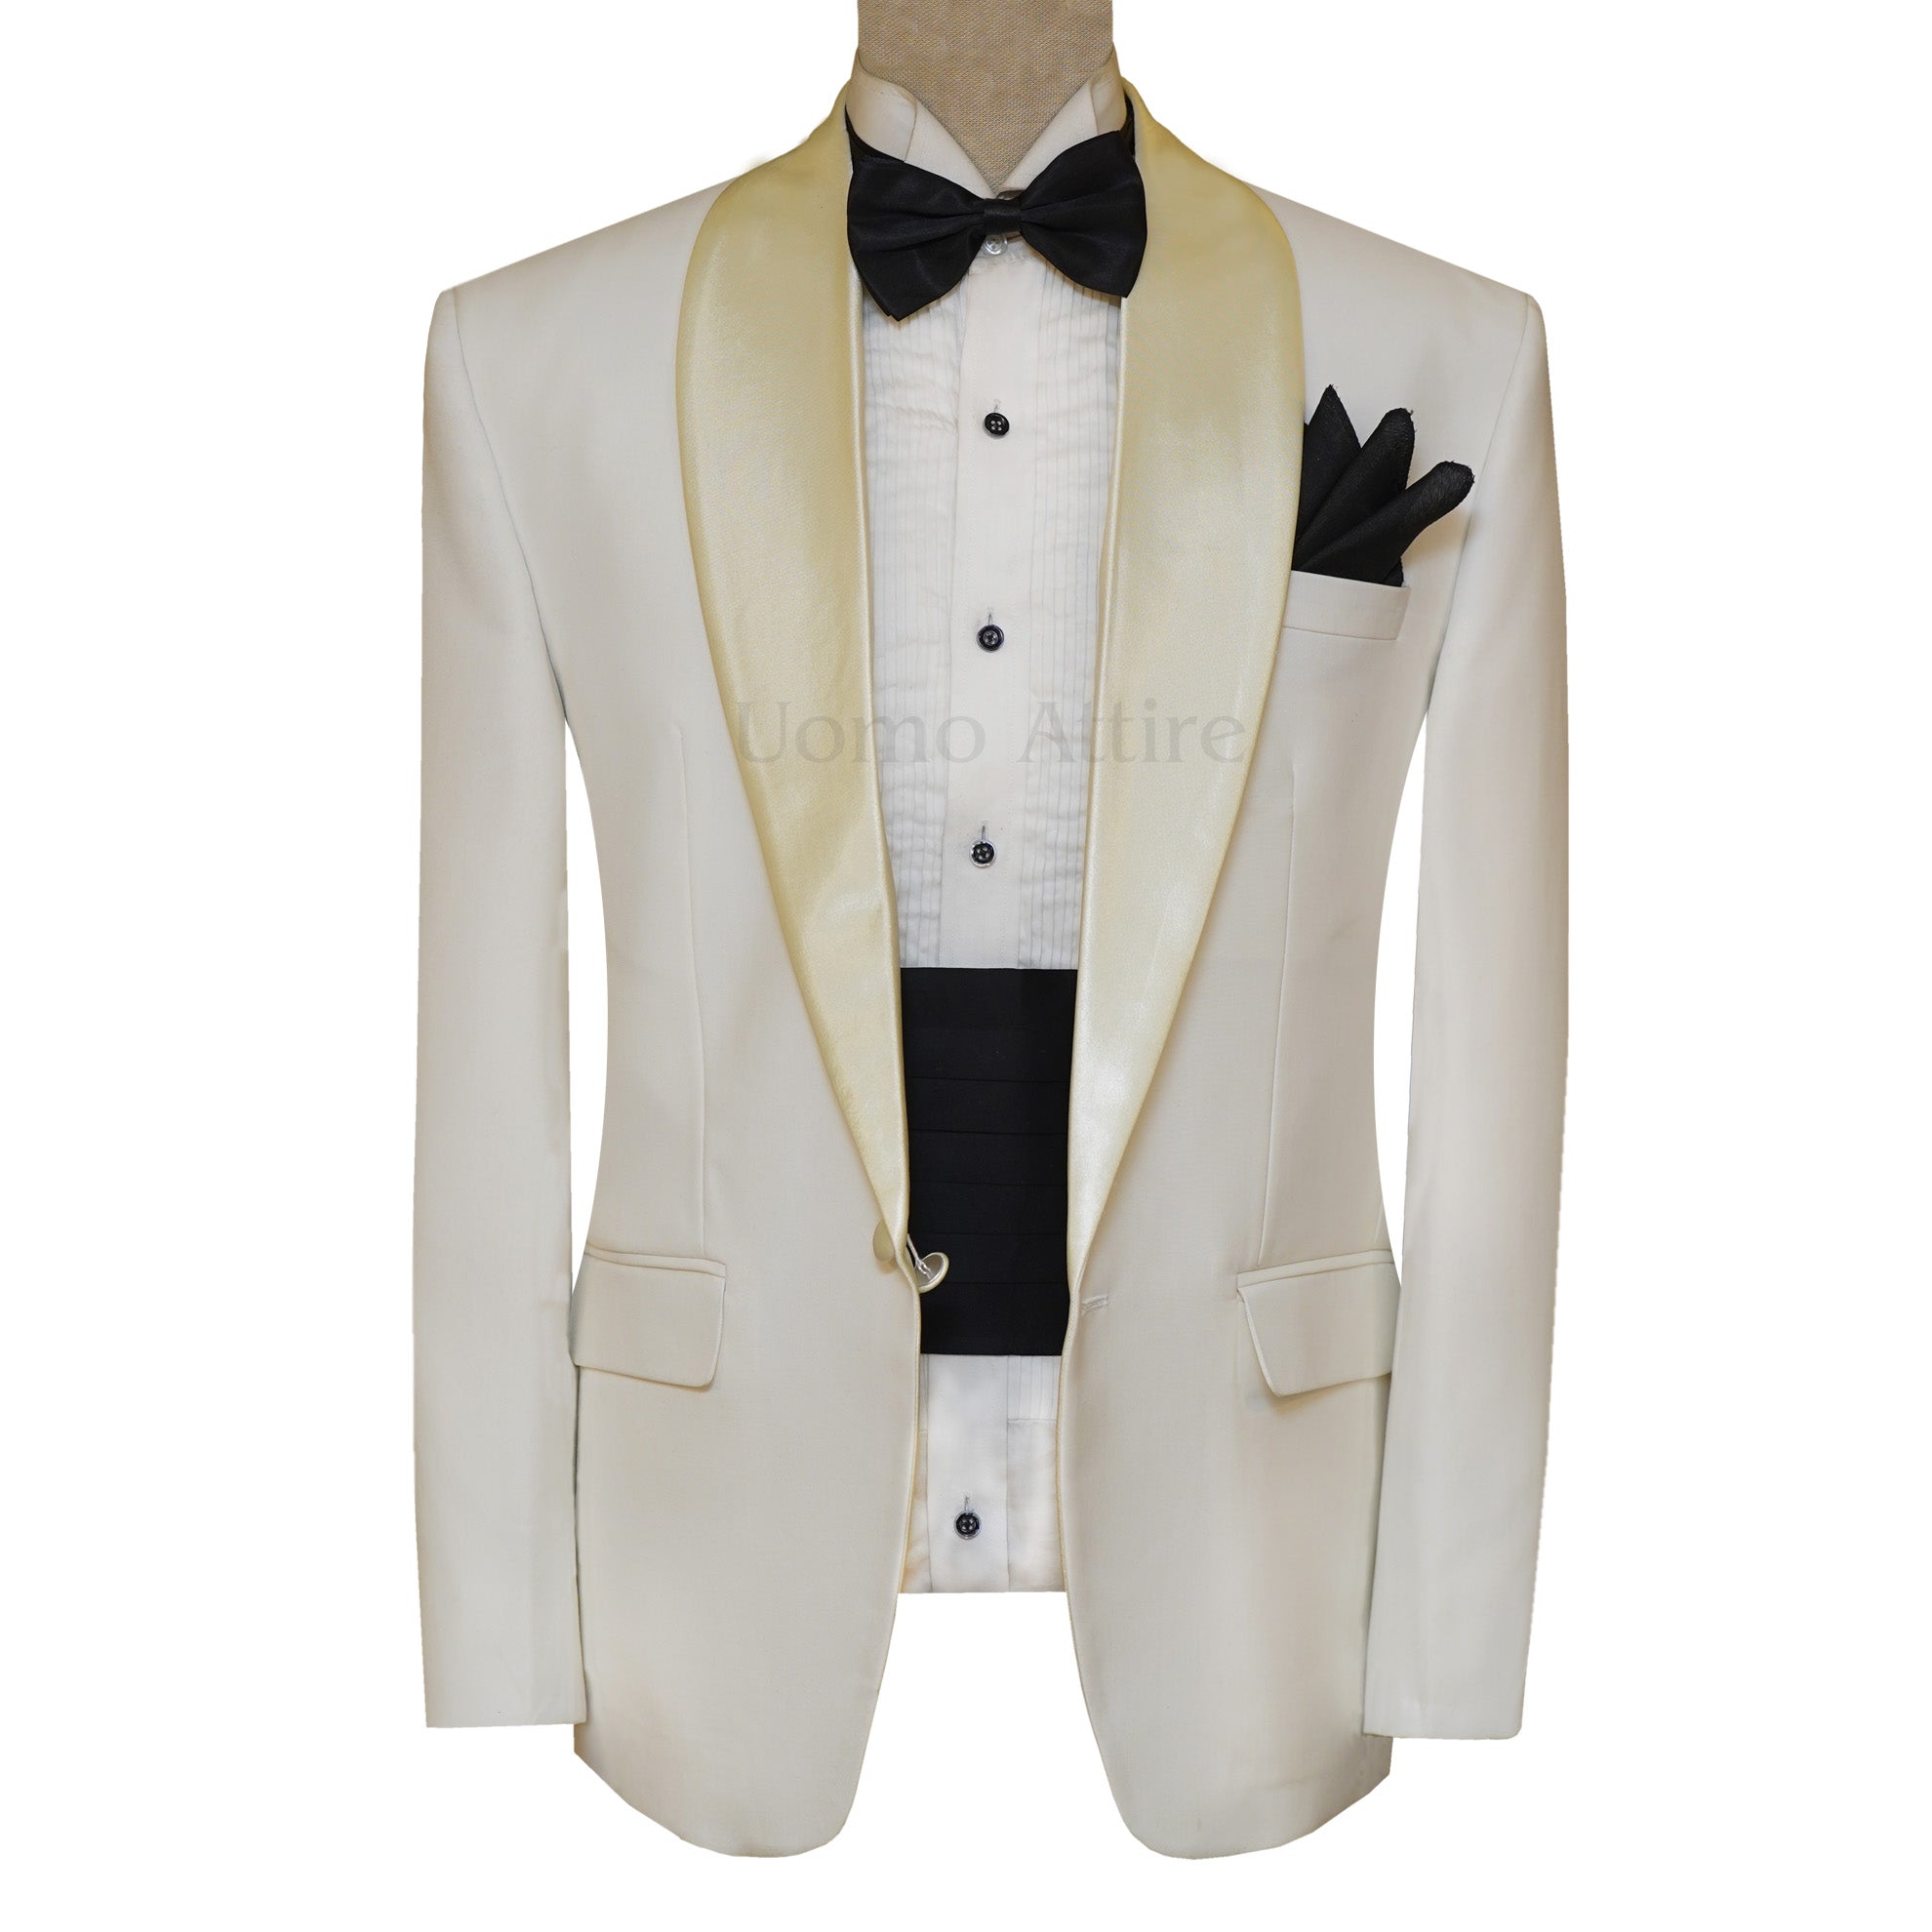 White Groom Tuxedo with Shiny Gold Lapel